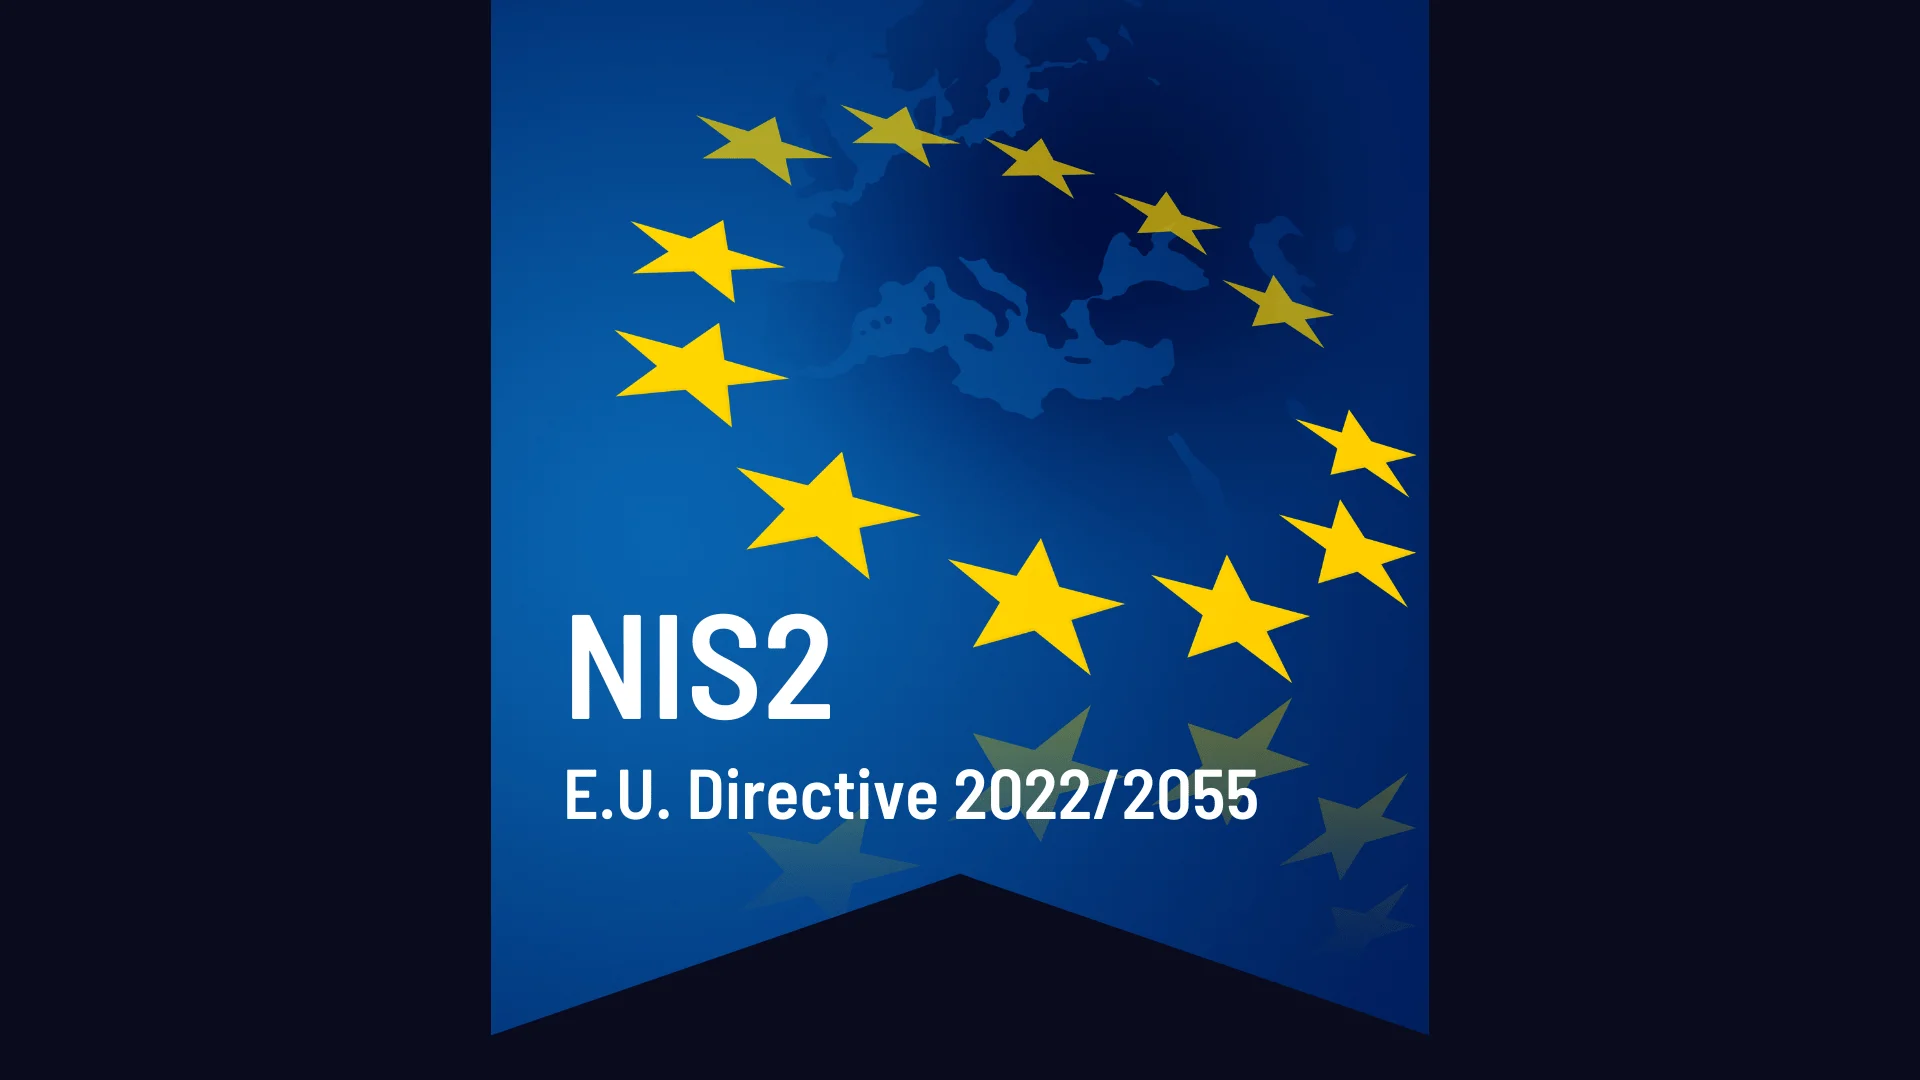 NIS2 Directive – E.U. Directive 2022/2055